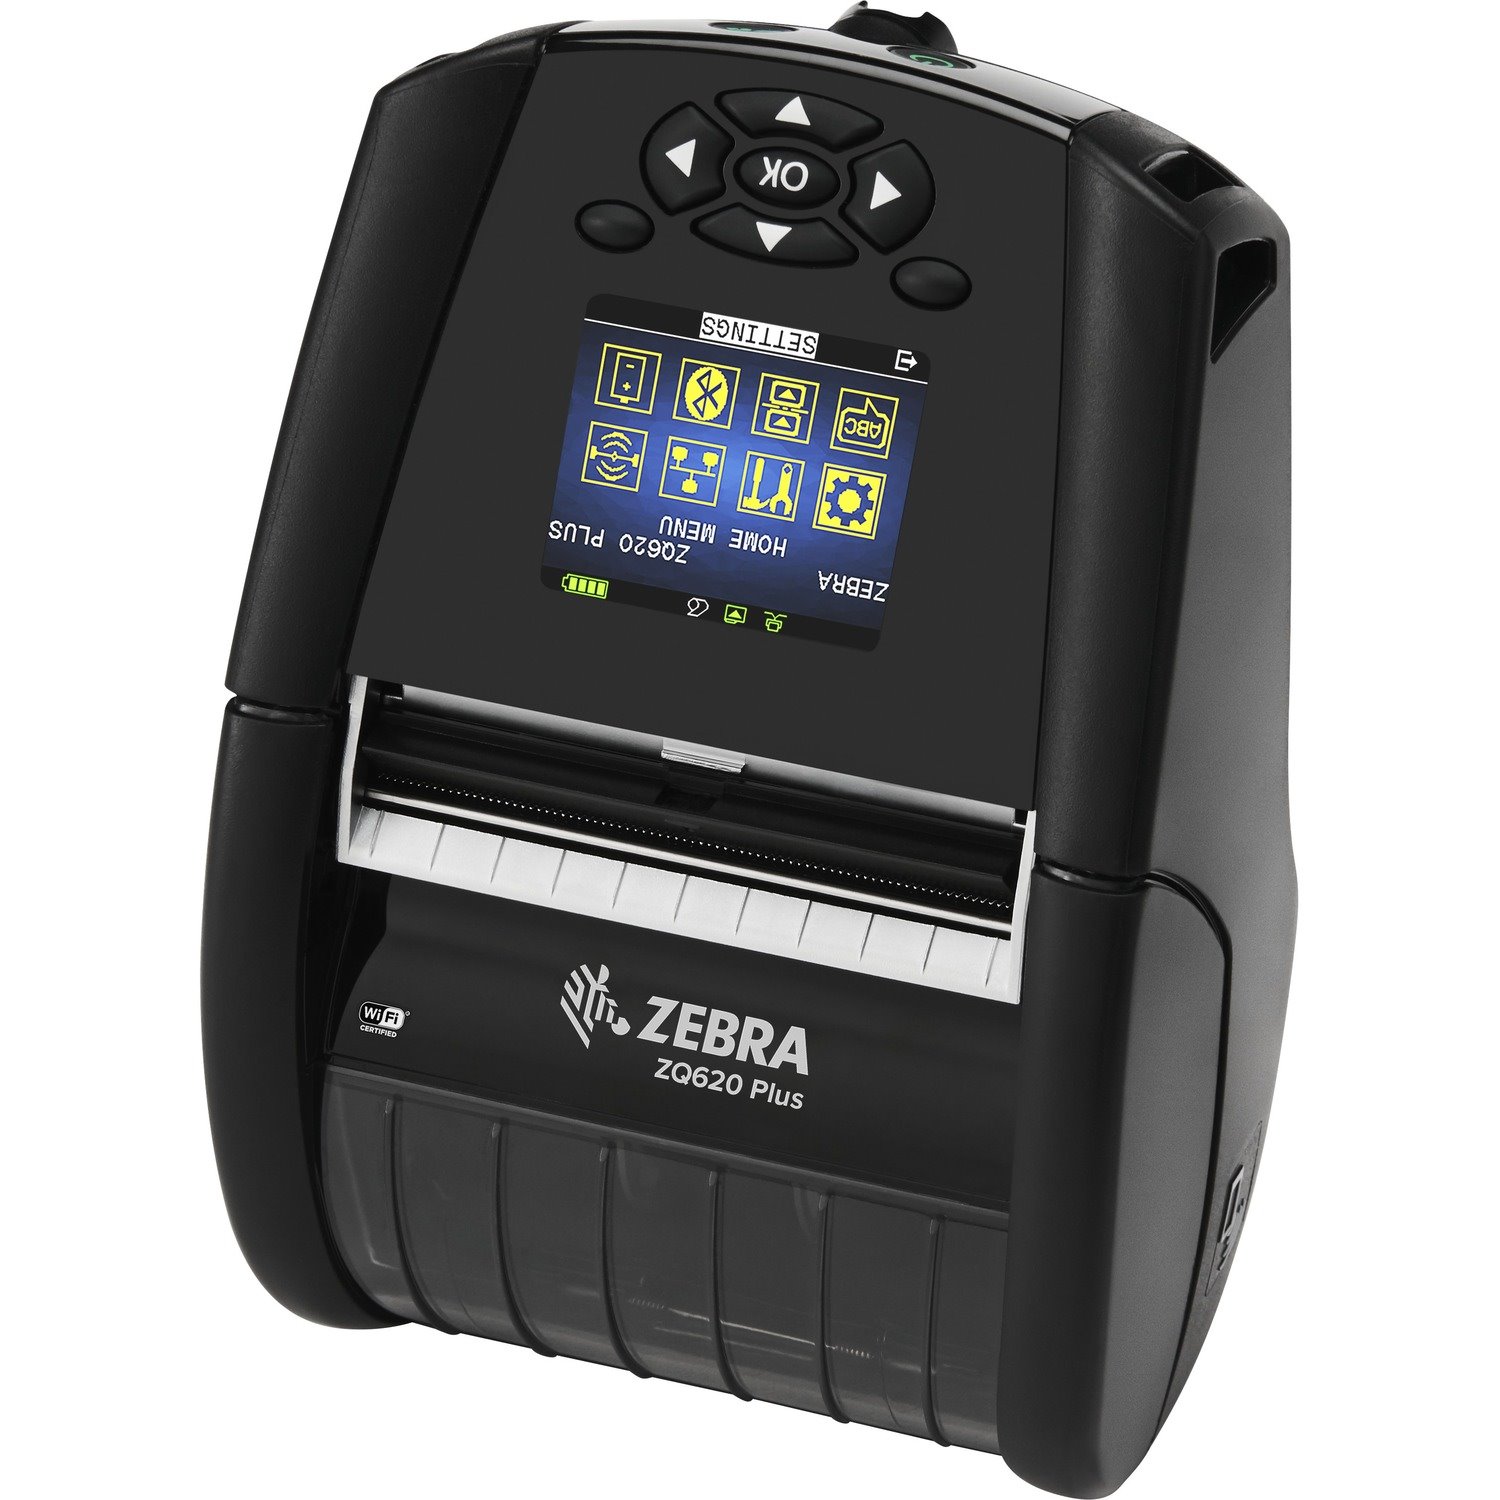 Zebra ZQ620 Plus Desktop, Industrial, Mobile Direct Thermal Printer - Monochrome - Label/Receipt Print - Bluetooth - Near Field Communication (NFC)